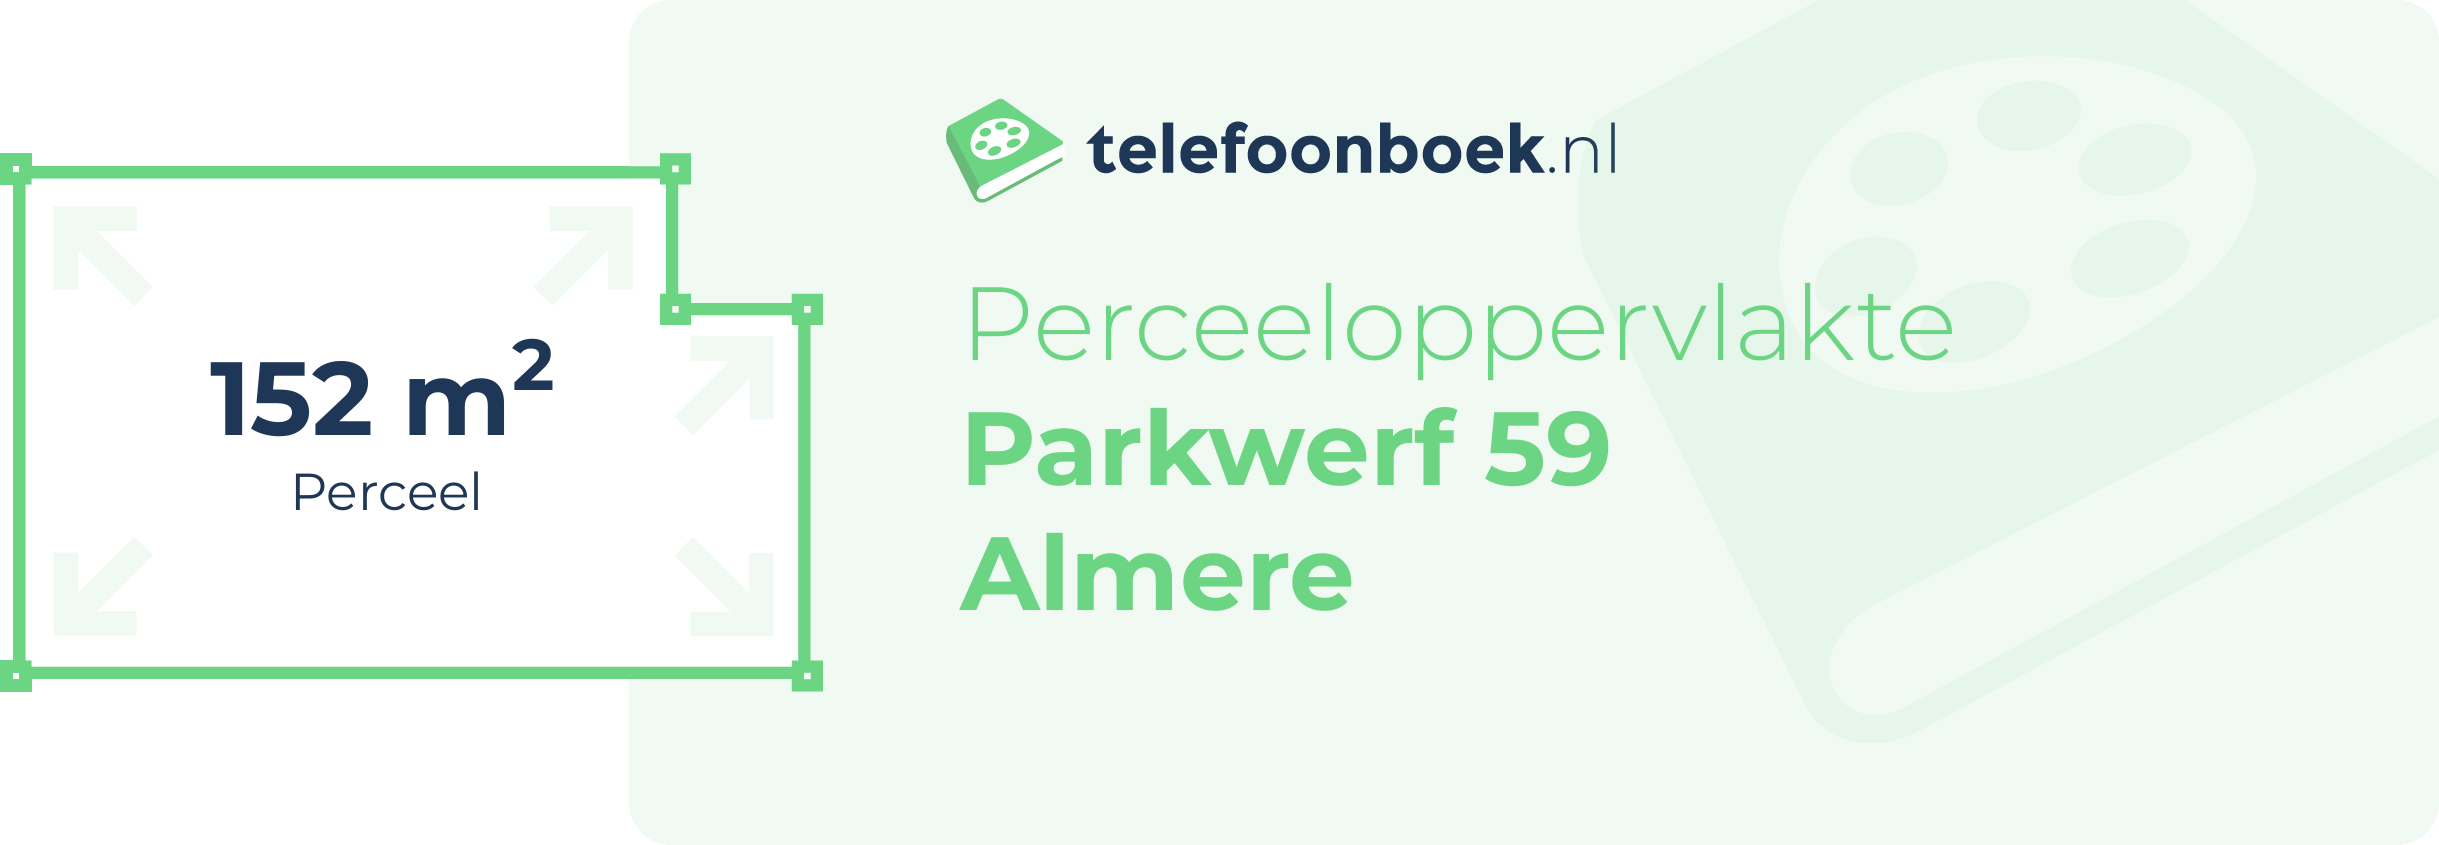 Perceeloppervlakte Parkwerf 59 Almere